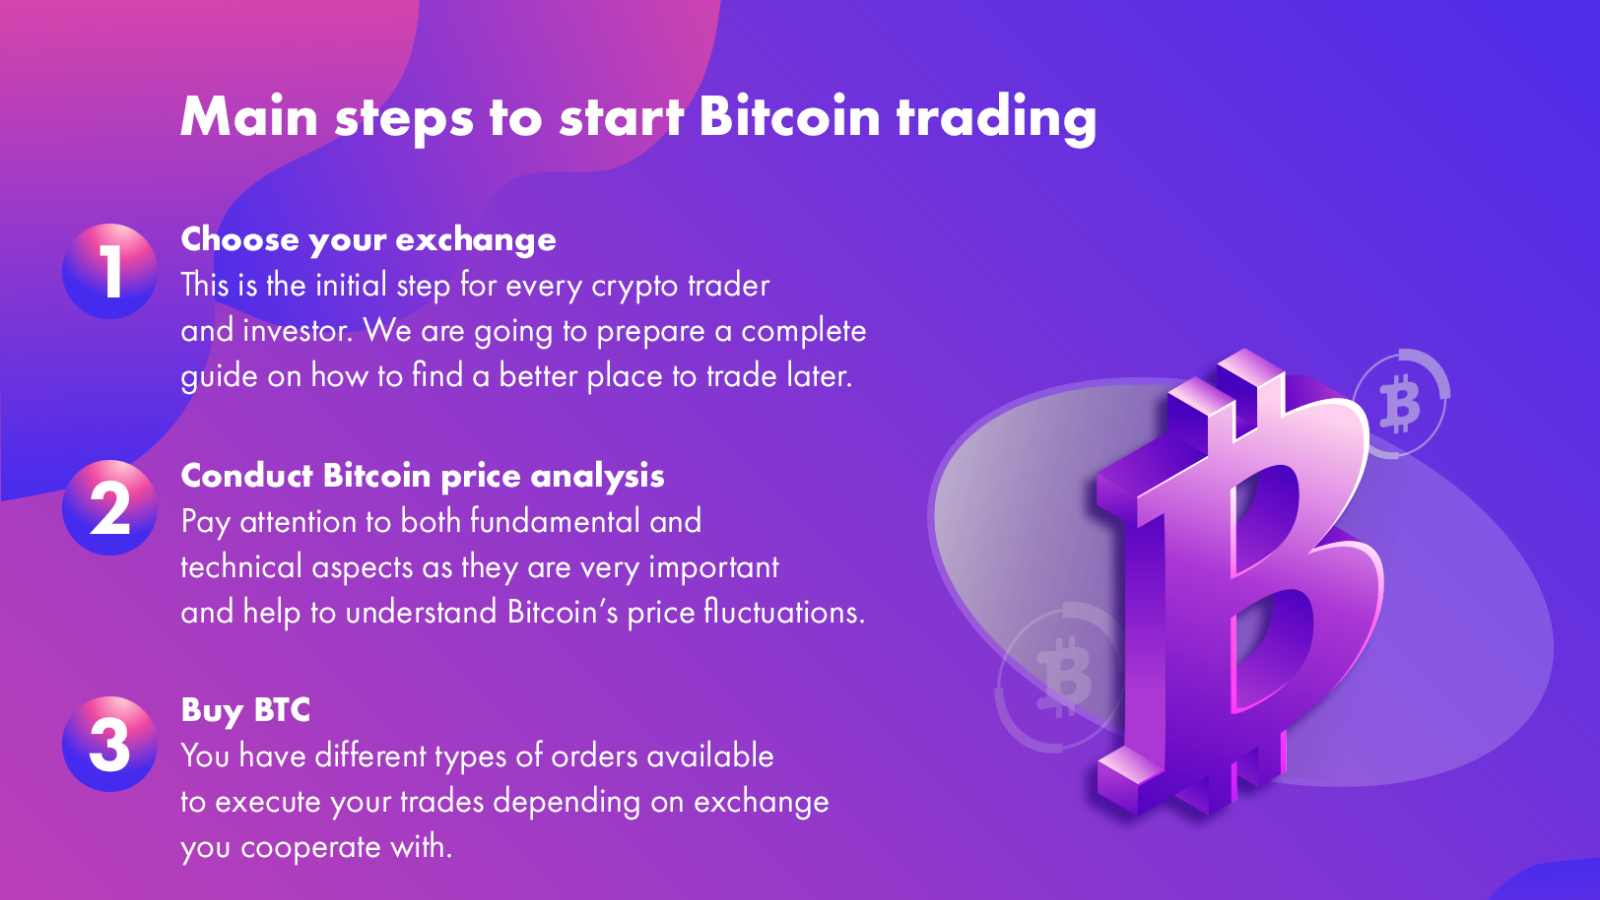 Main steps to start Bitcoin trading